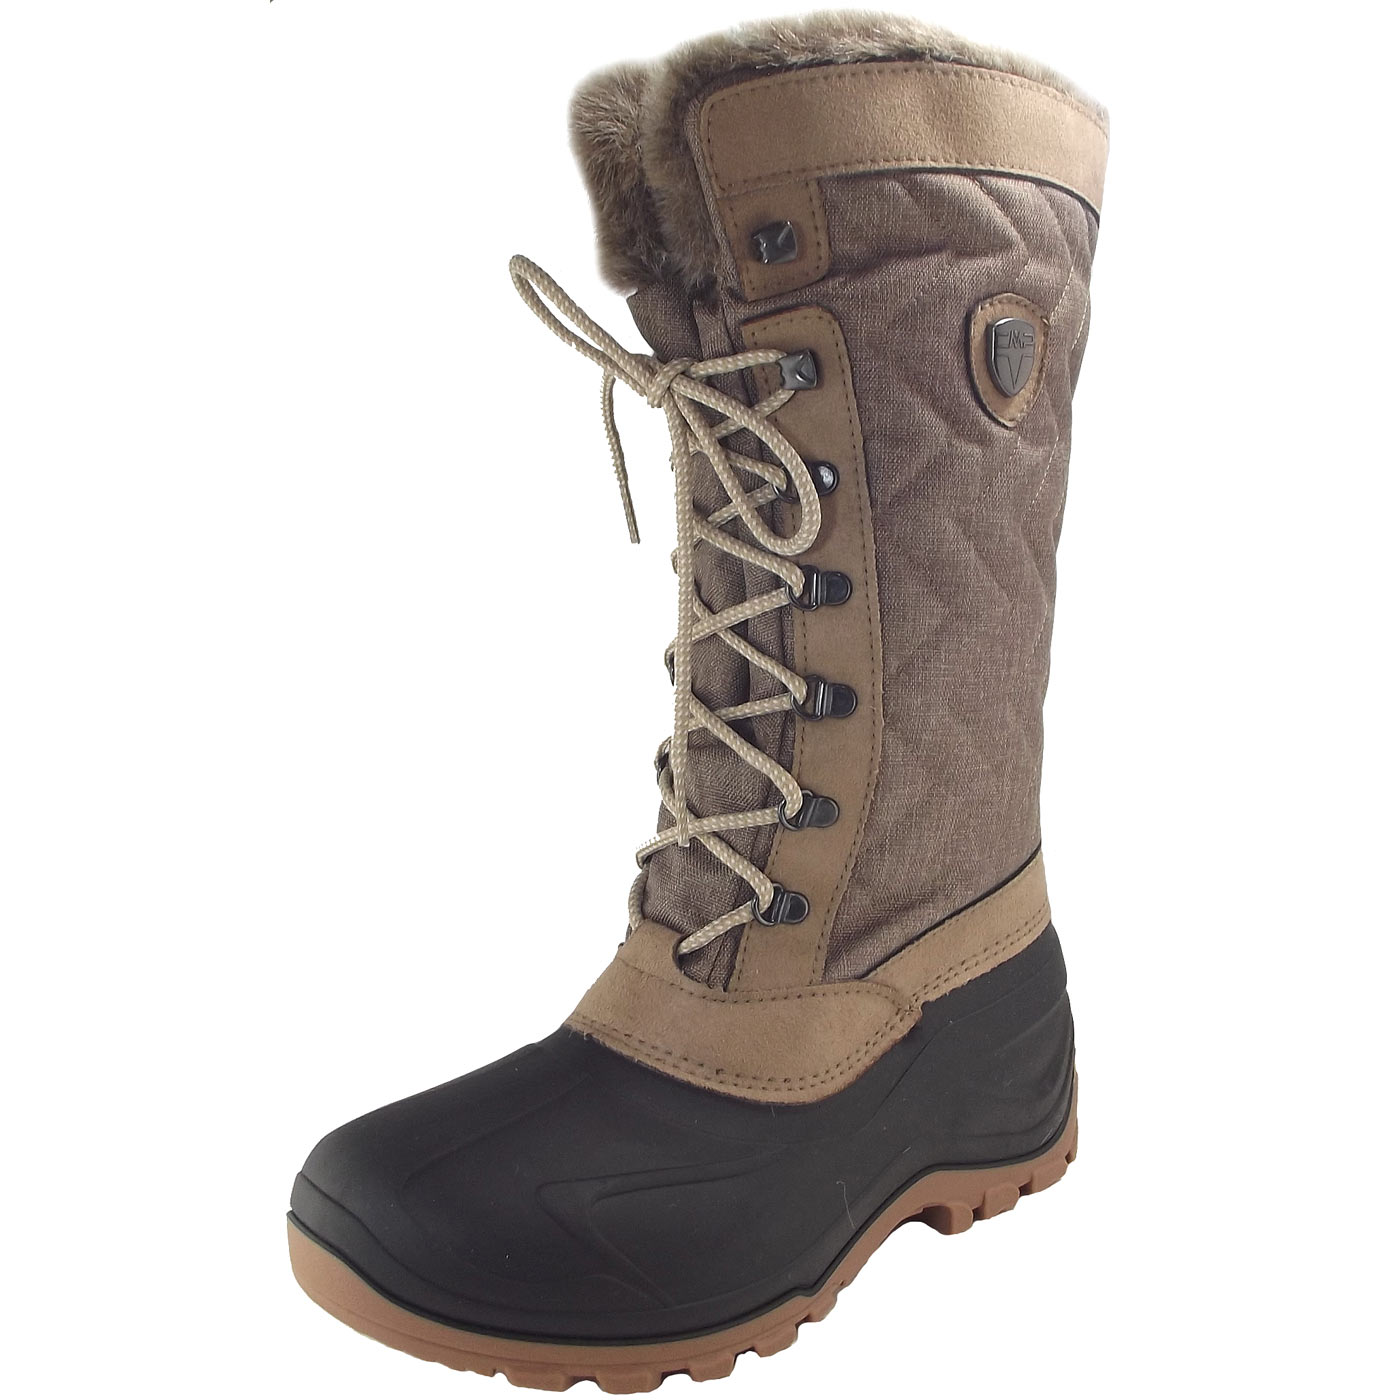 women's winter boots brown